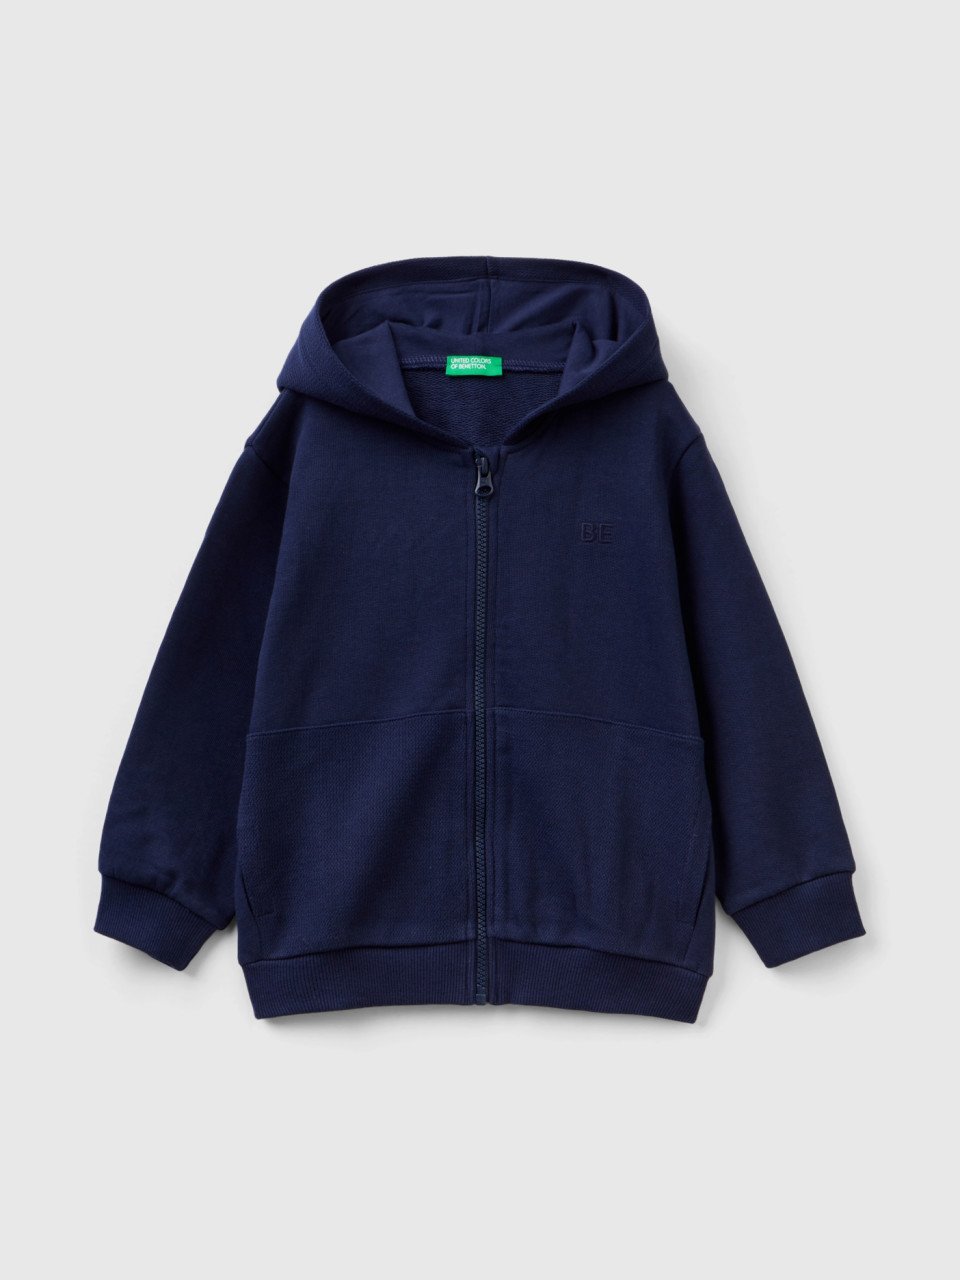 Benetton, Sweatshirt With Zip And Pockets, Dark Blue, Kids